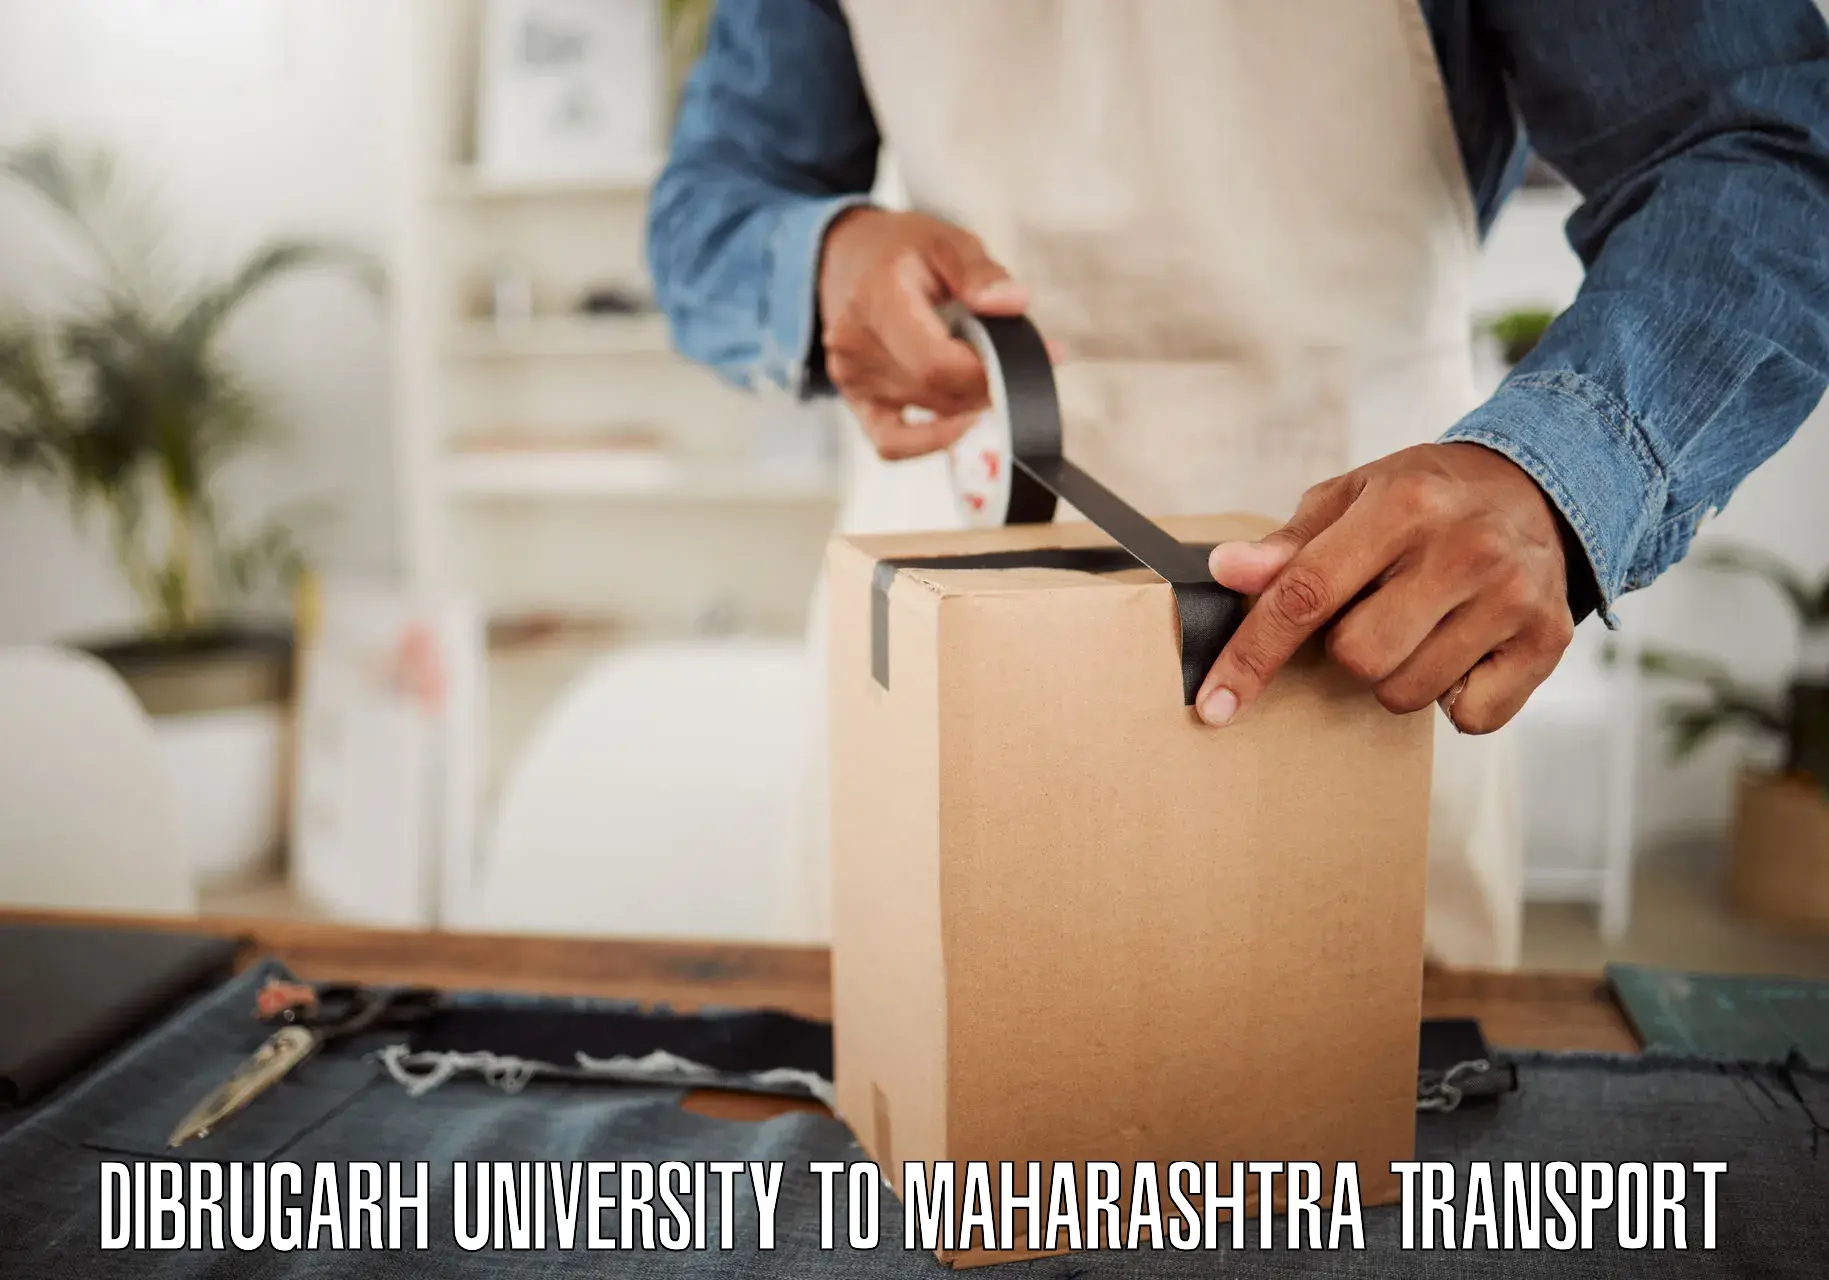 Furniture transport service Dibrugarh University to Manmad